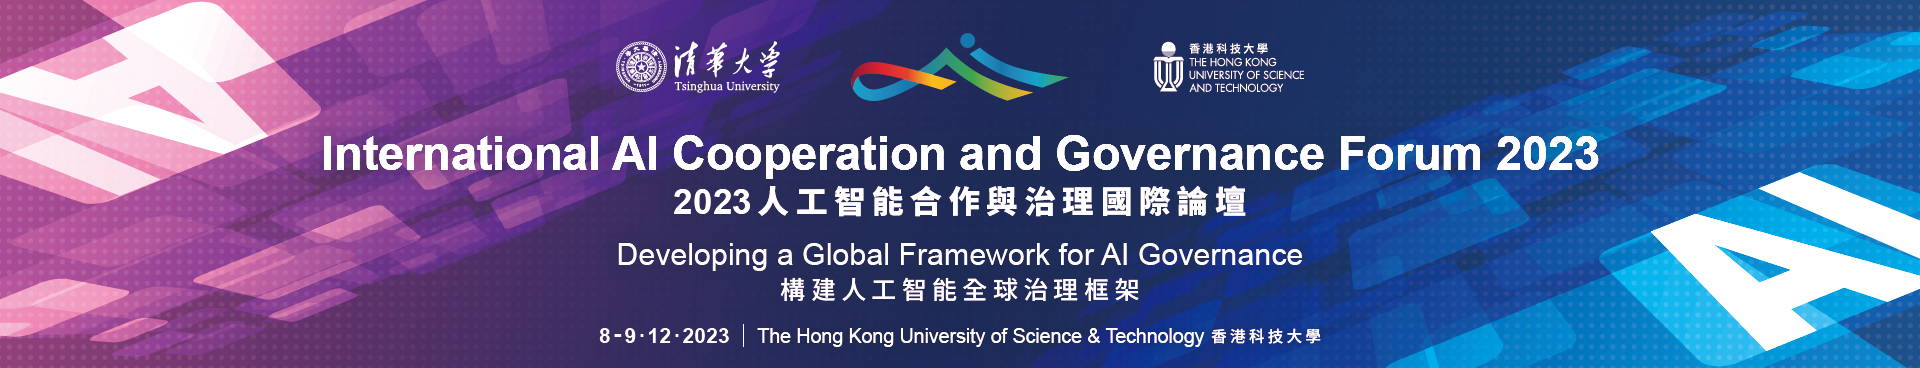 The International AI Cooperation and Governance Forum 2023 (Dec 8-9, 2023)